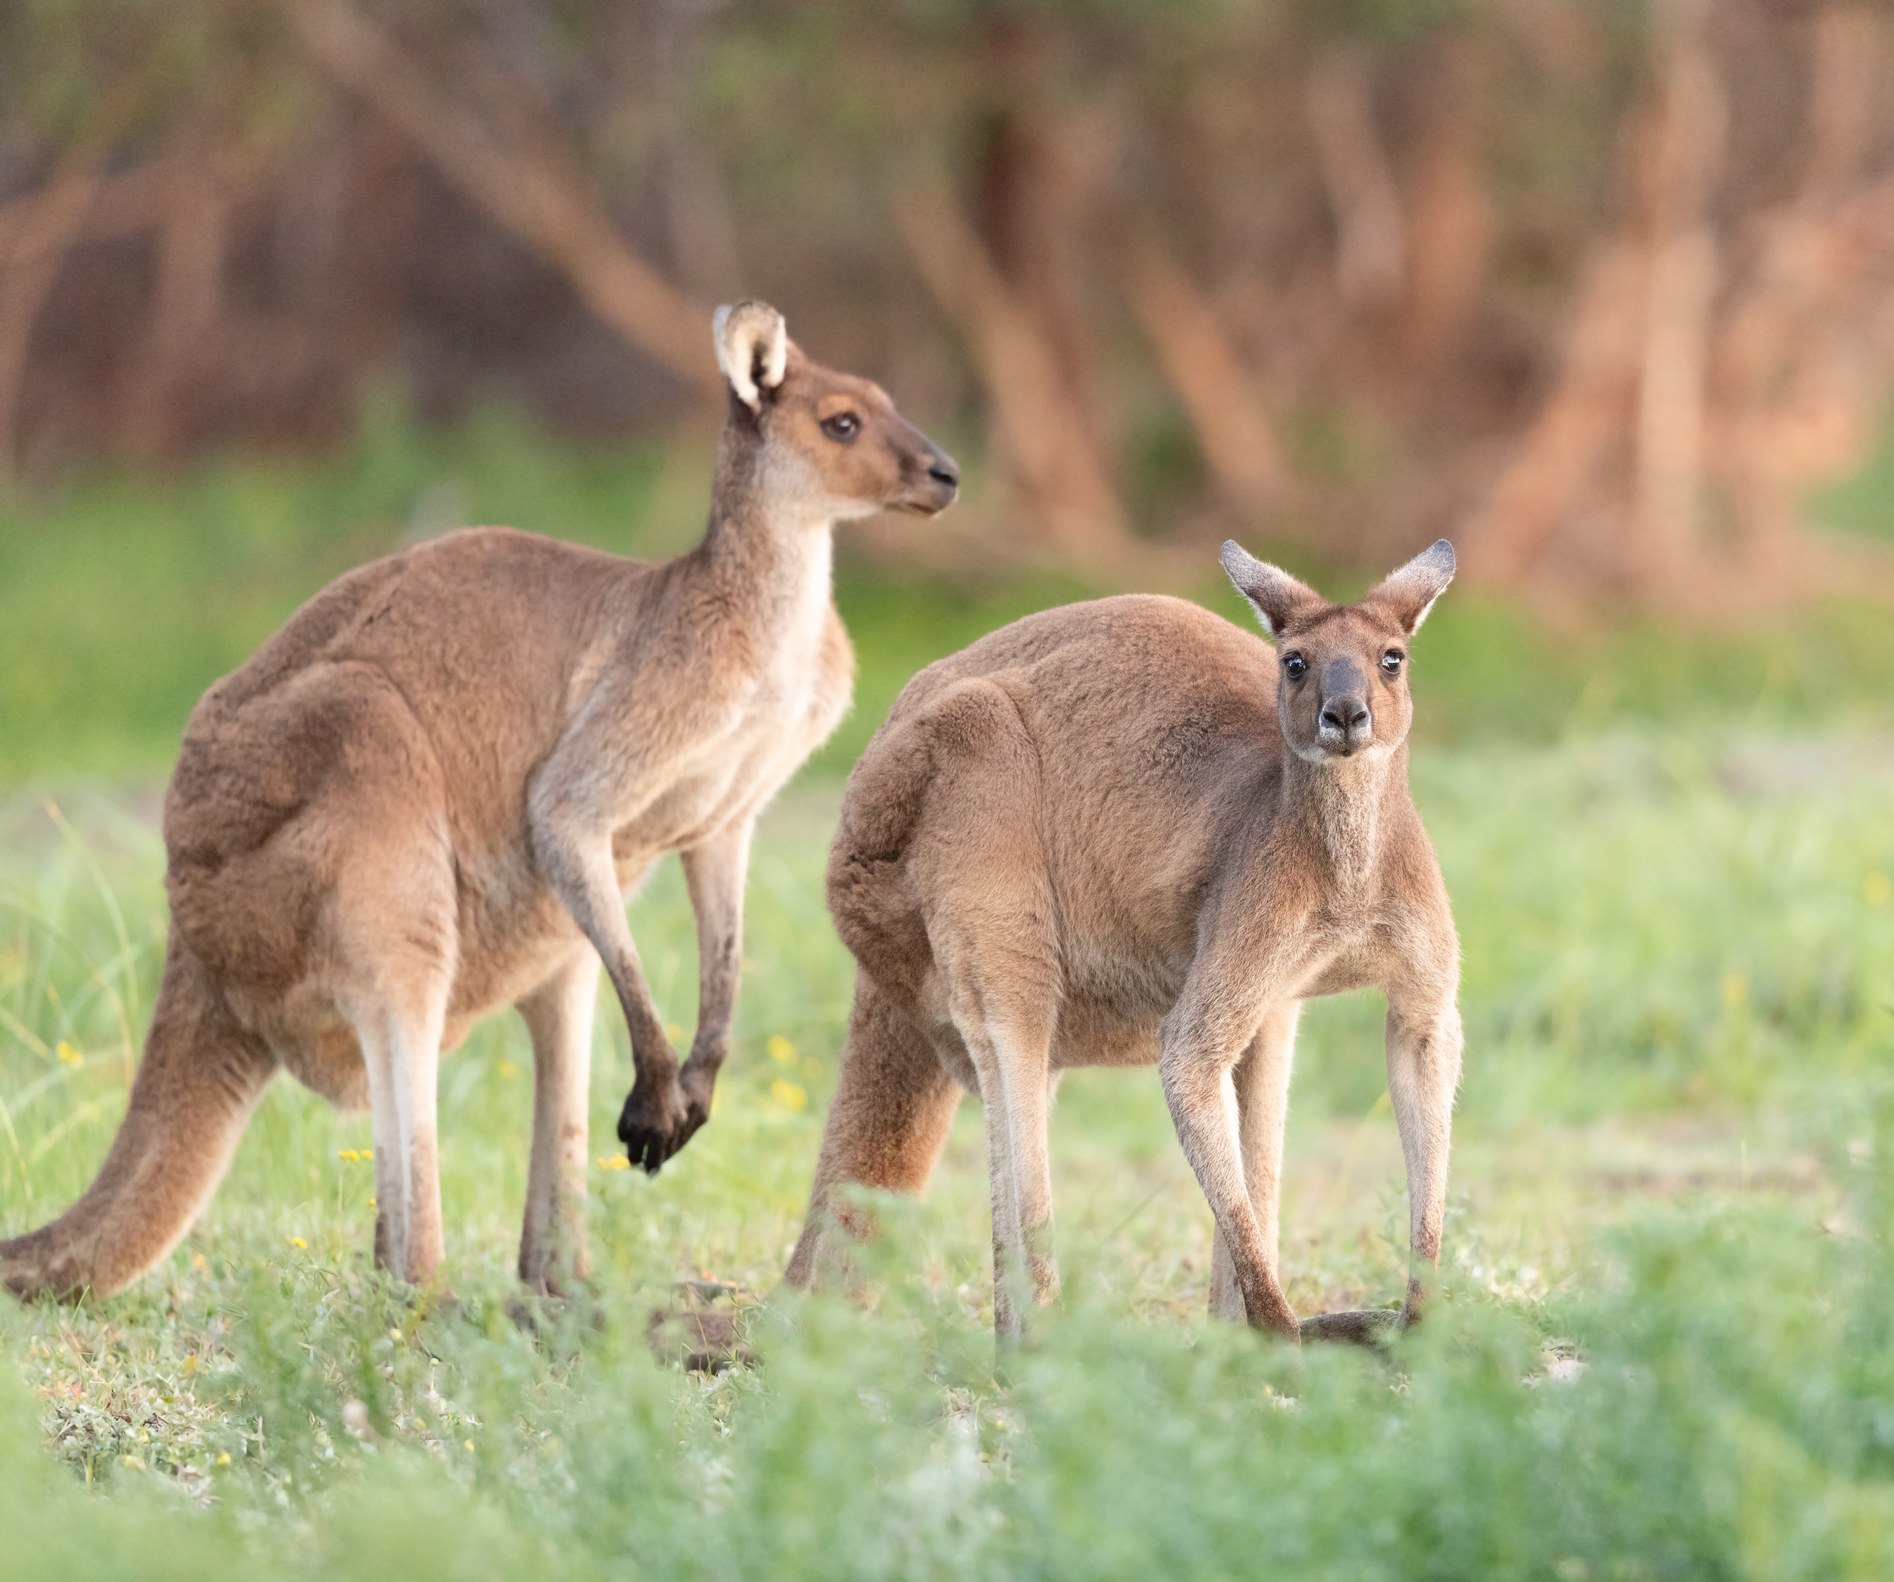 Pair of kangaroos in the wild